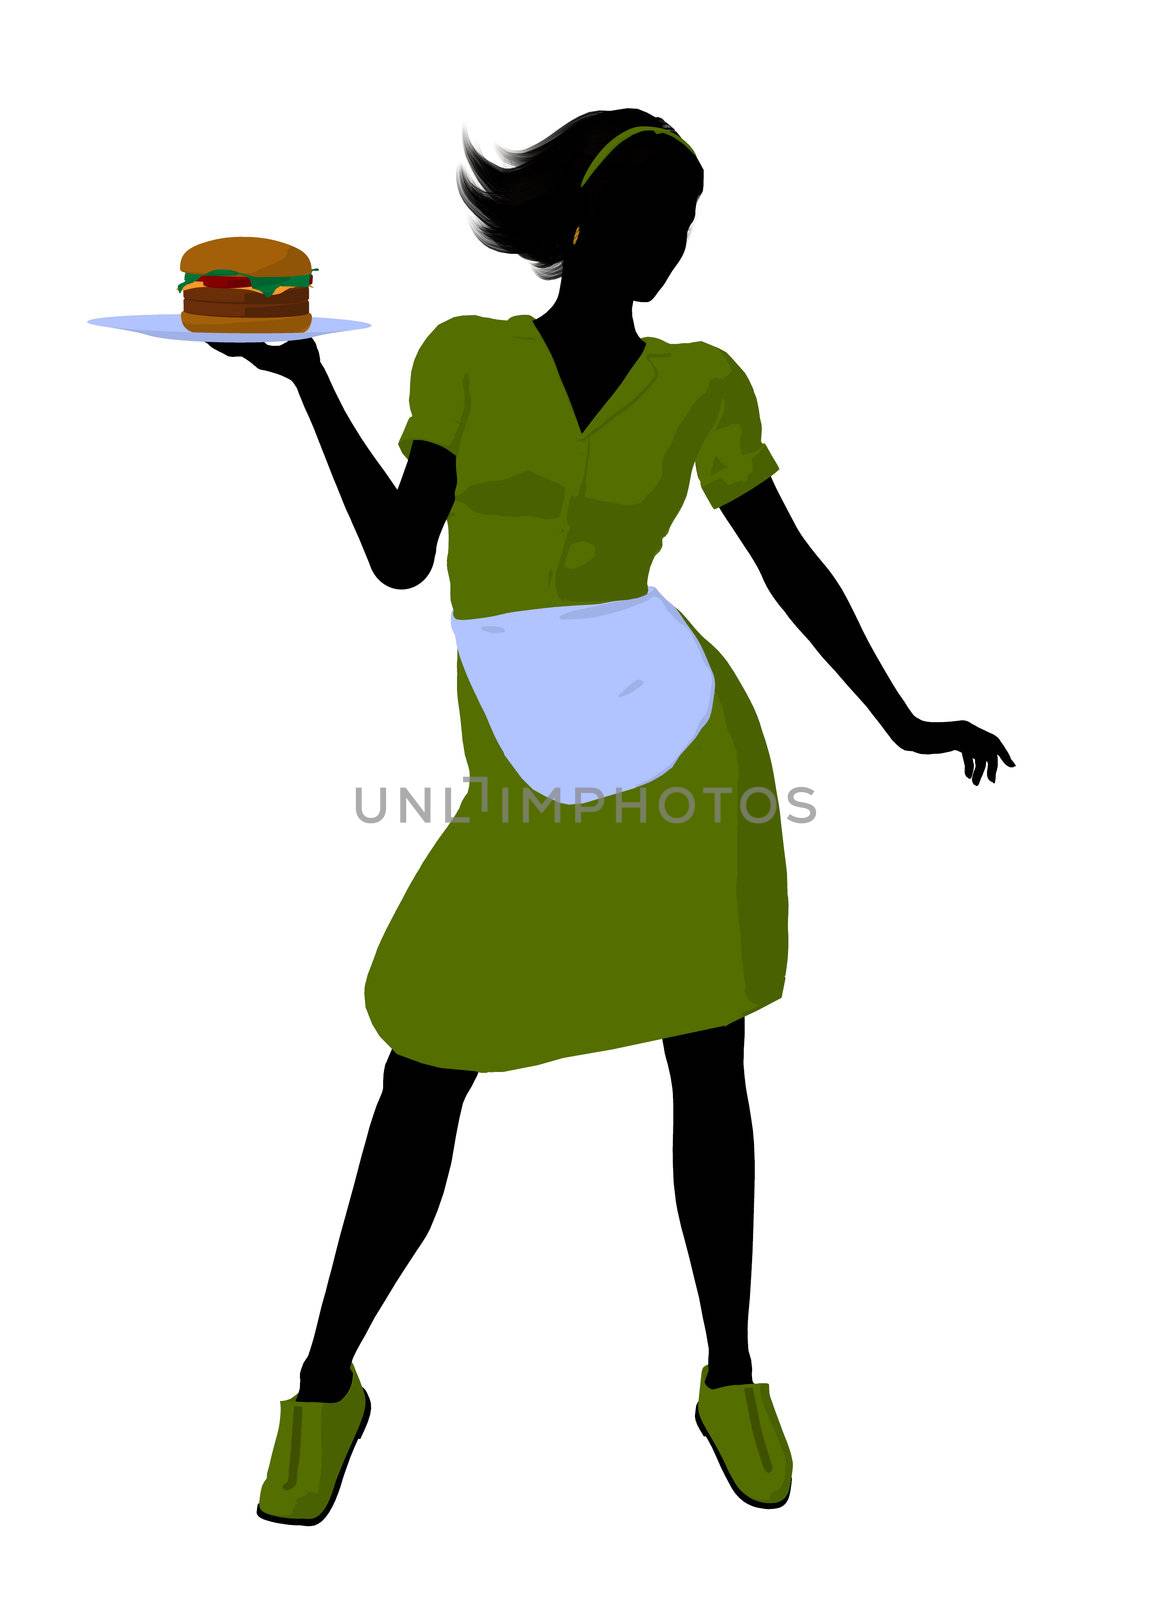 Waitress Illustration Silhouette by kathygold